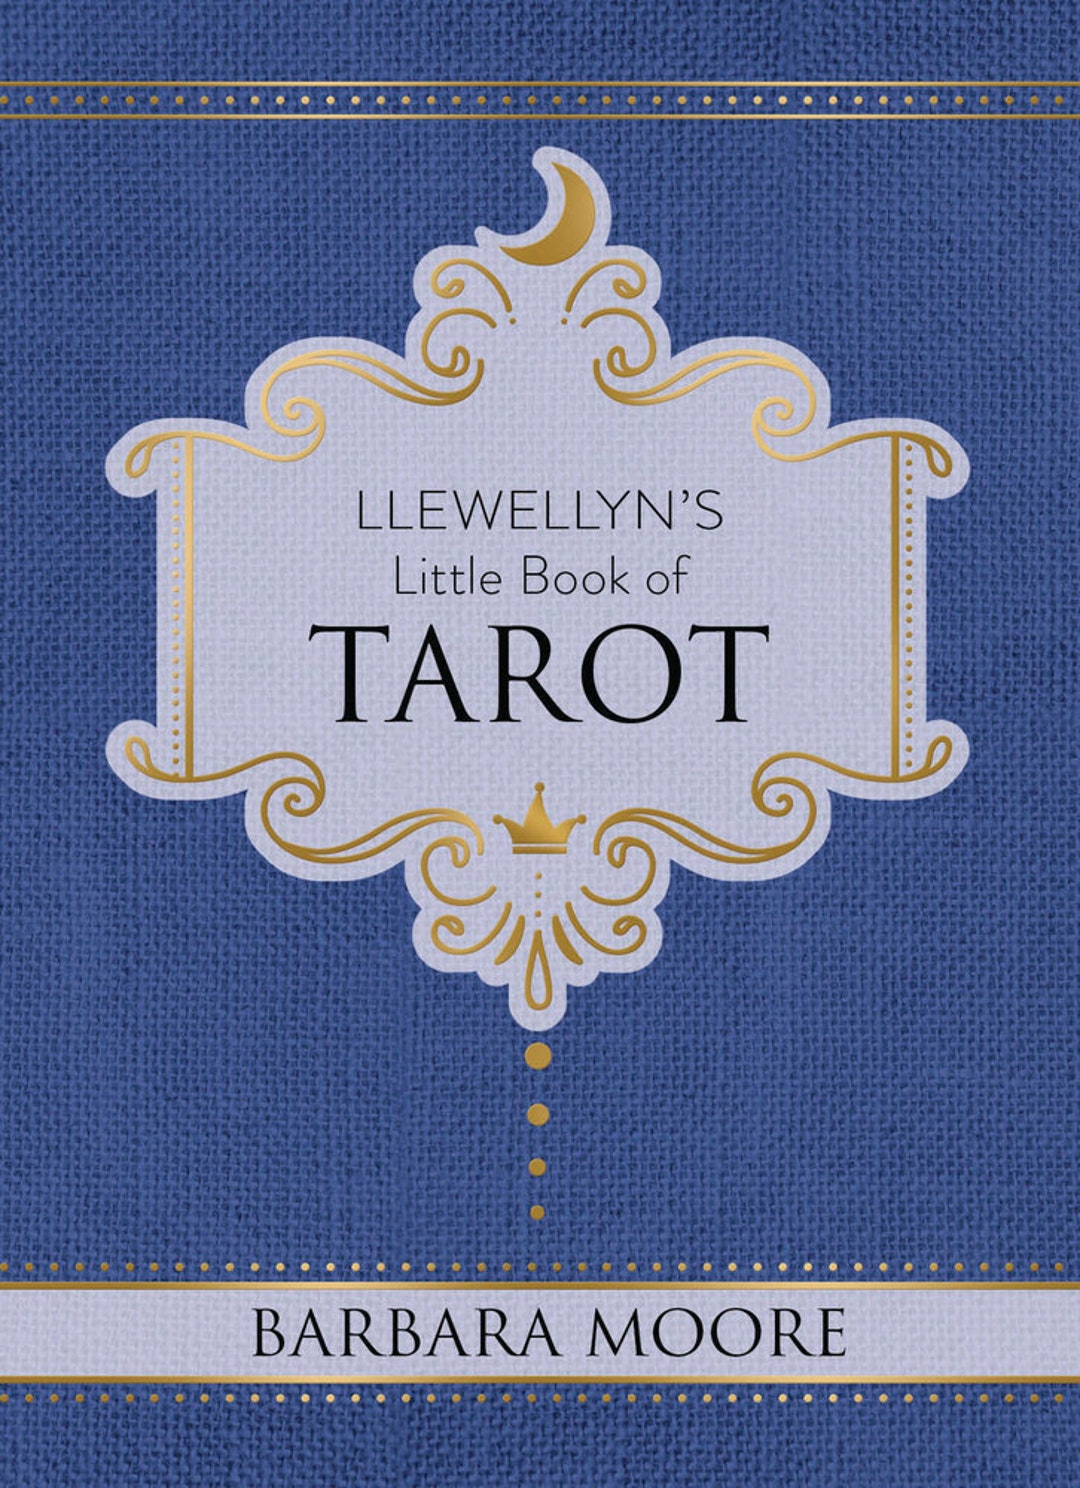 Llewellyn's Little BOOK of TAROT by Barbara Moore